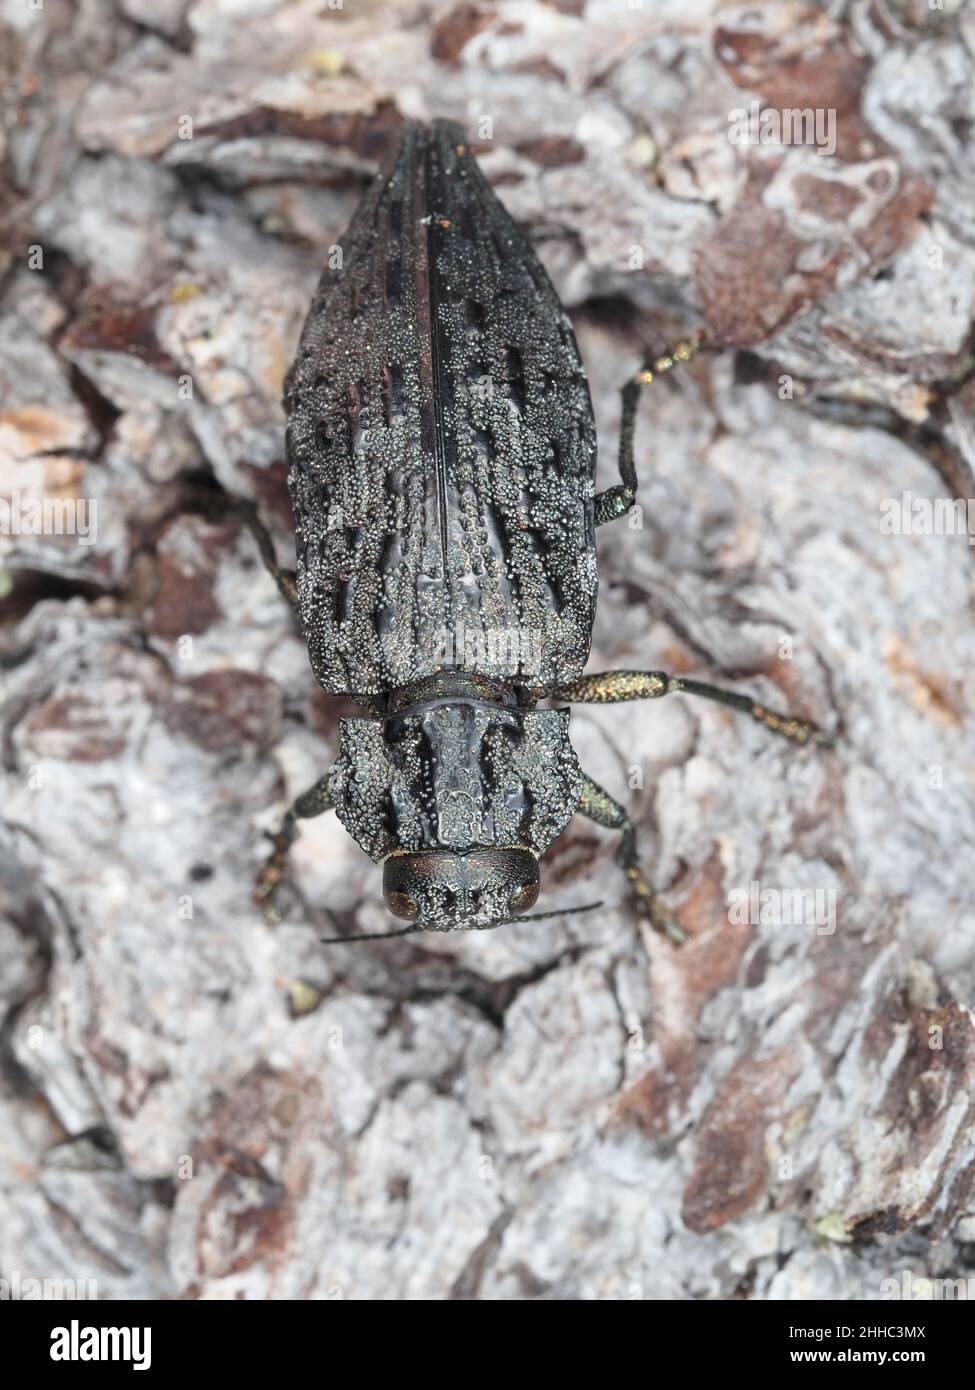 Metallic wood borer beetle, possibly Dicerca divaricata Stock Photo